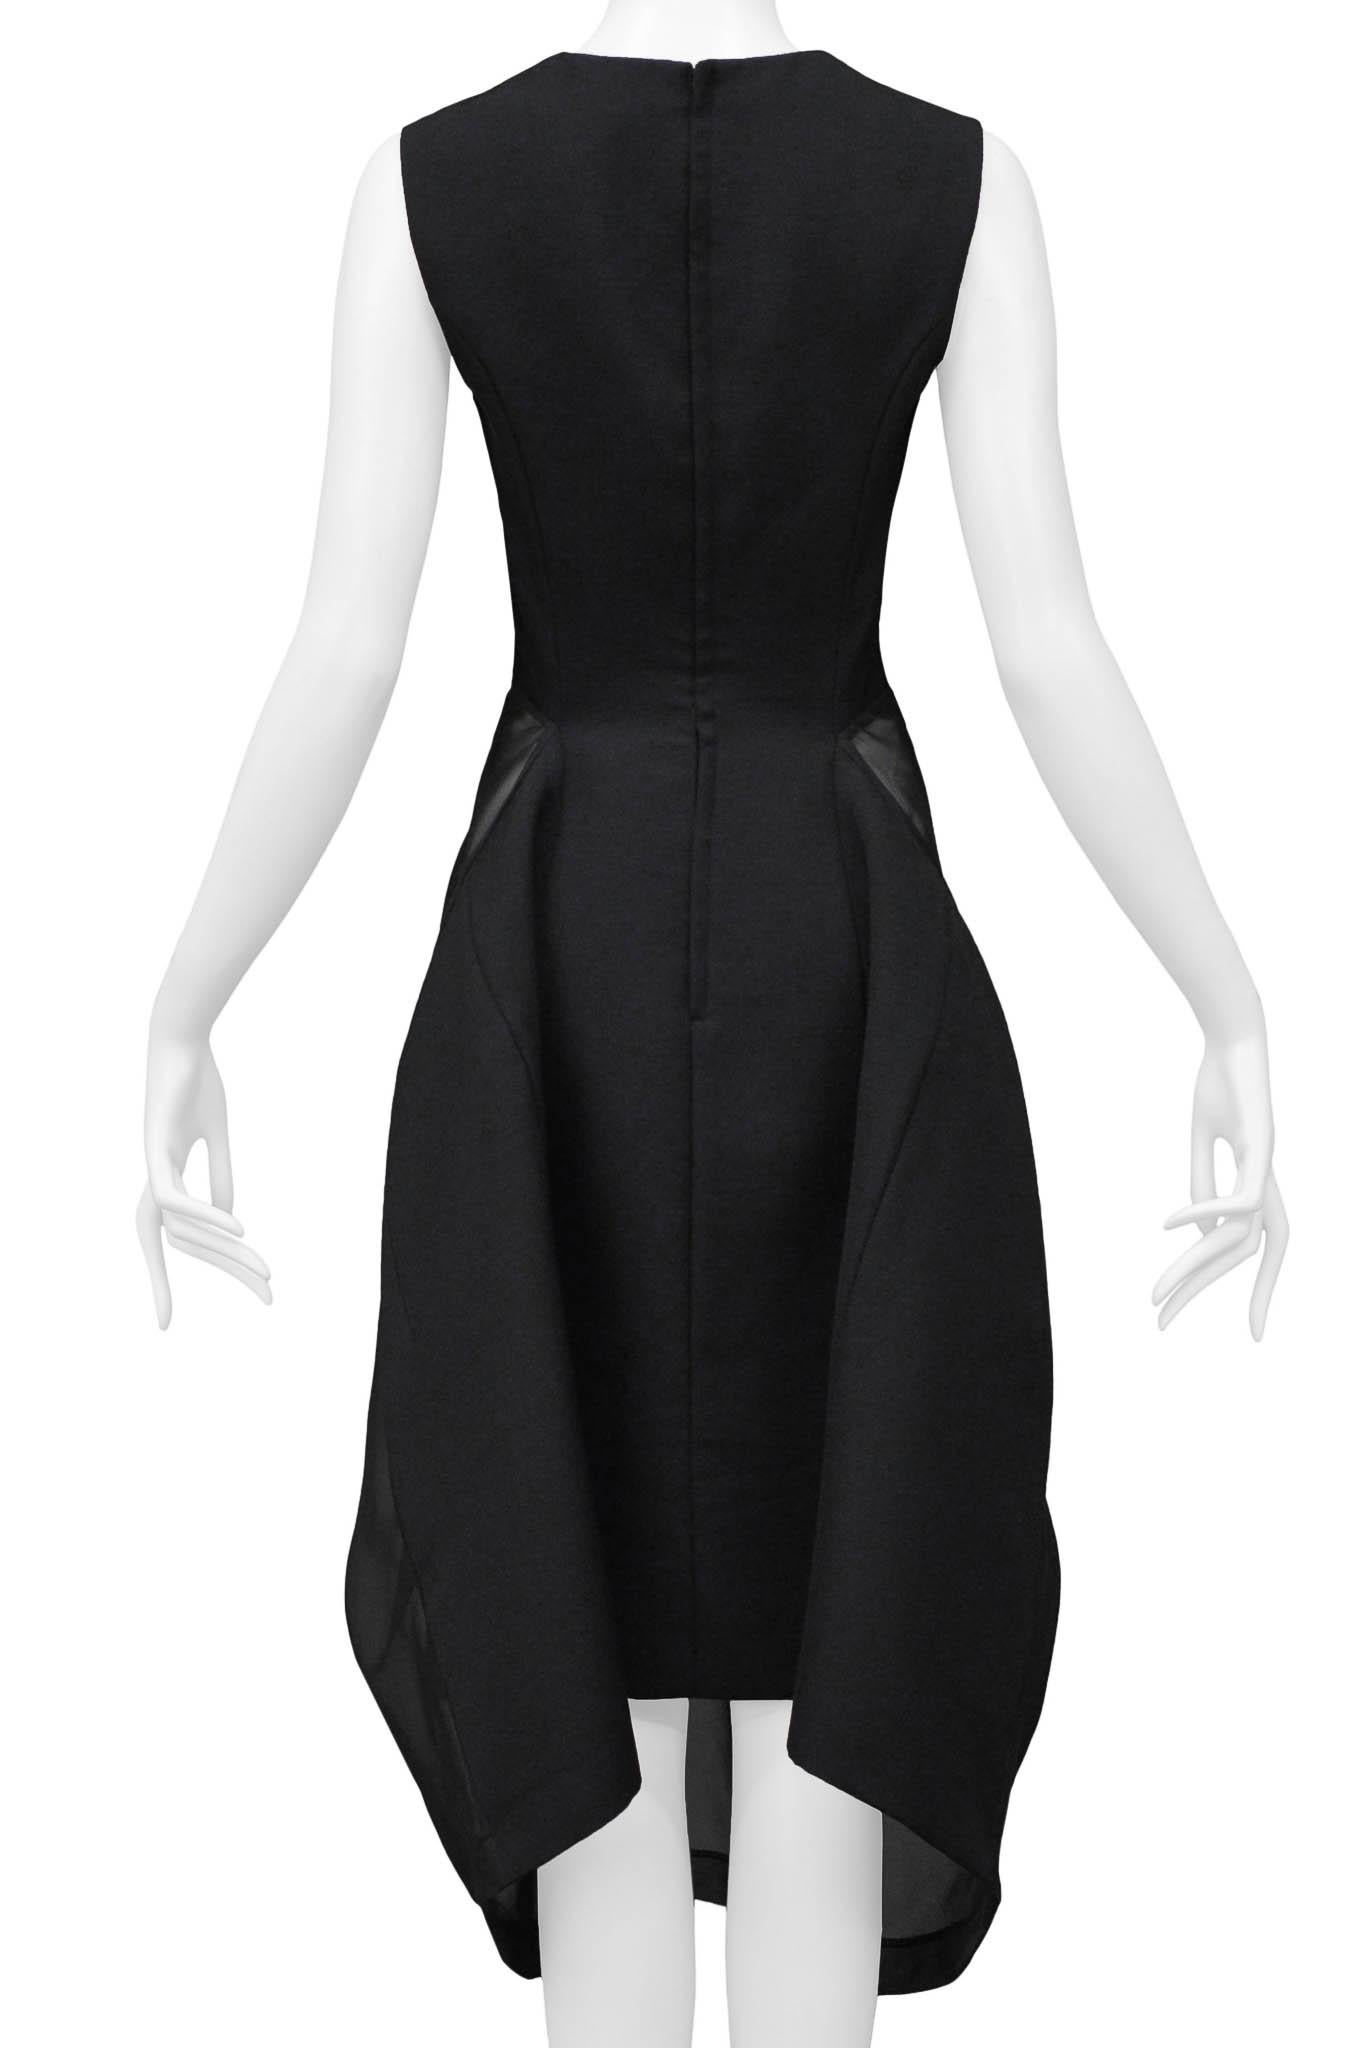 Comme Des Garcons Black Sheer Front Concept Dress 1997 For Sale 4